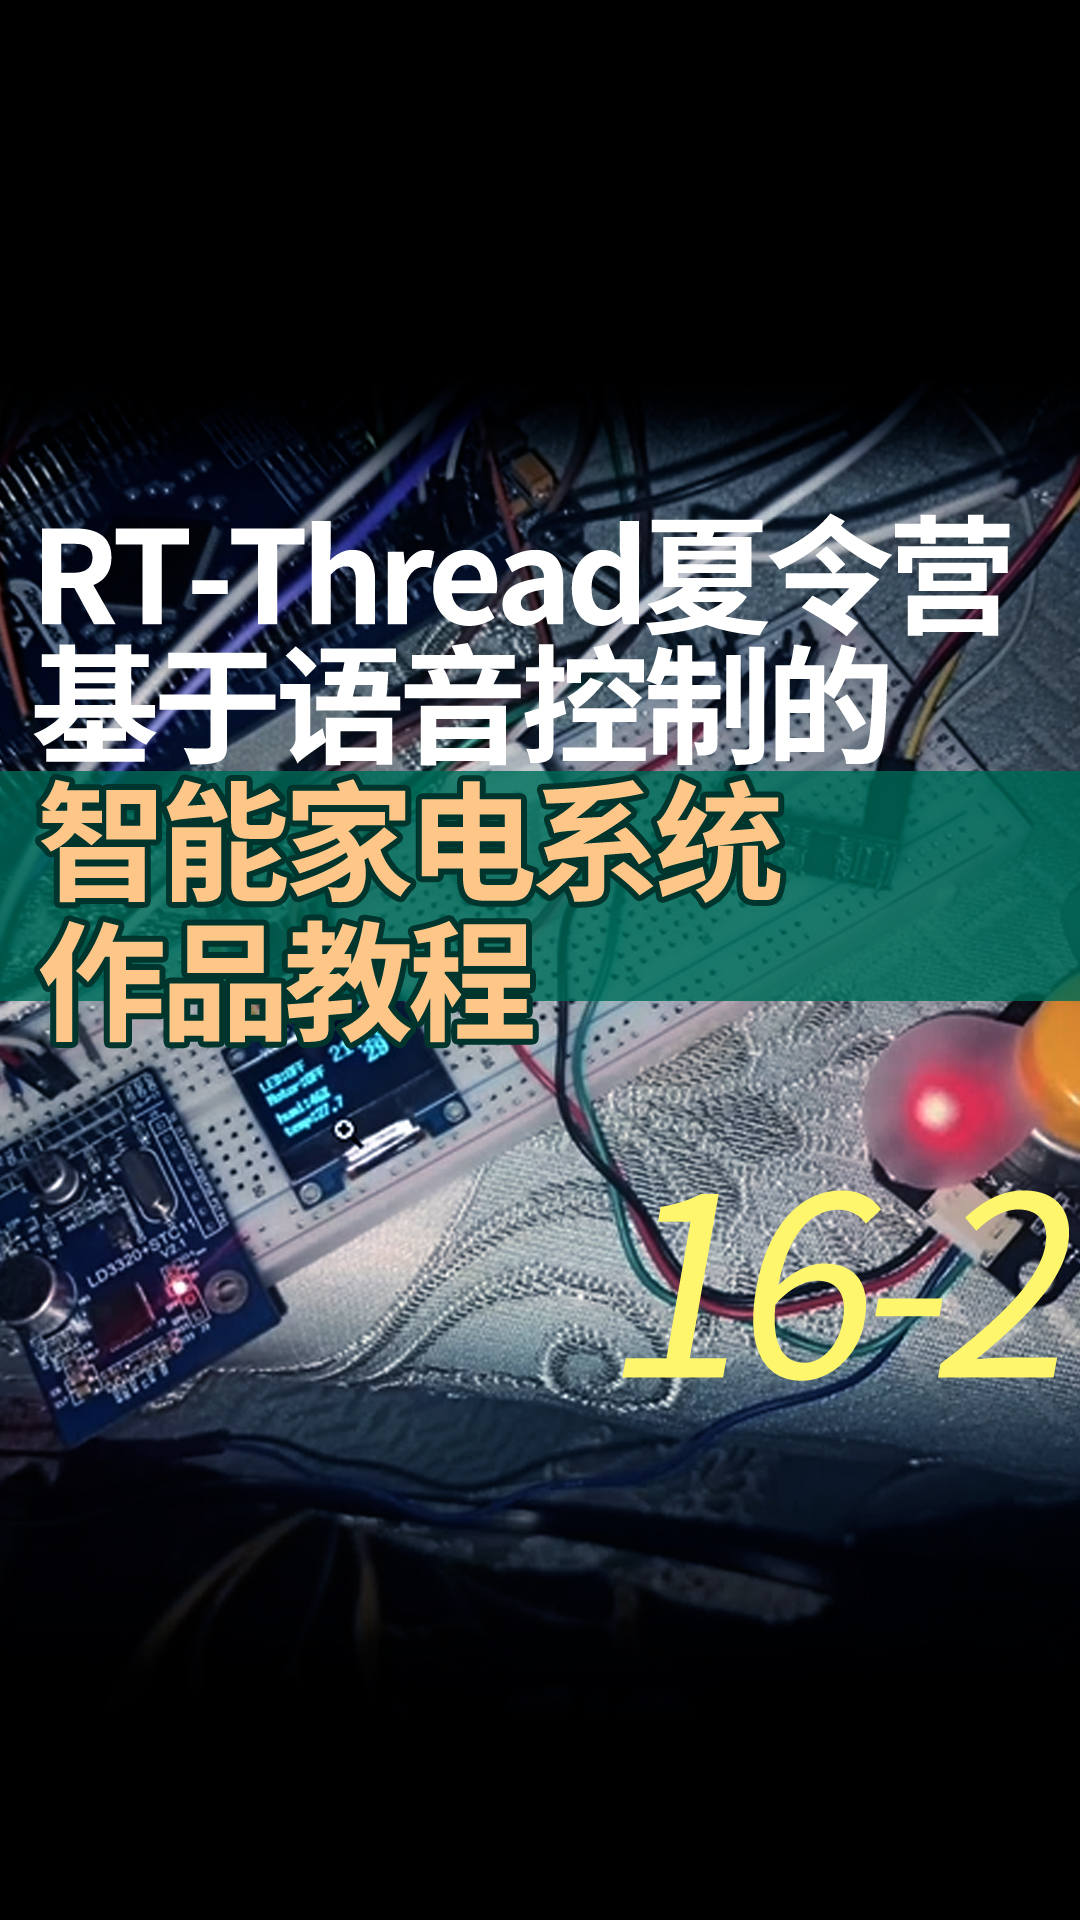 RT-Thread夏令营基于语音控制的智能家电系统作品教程16-2 网络对时